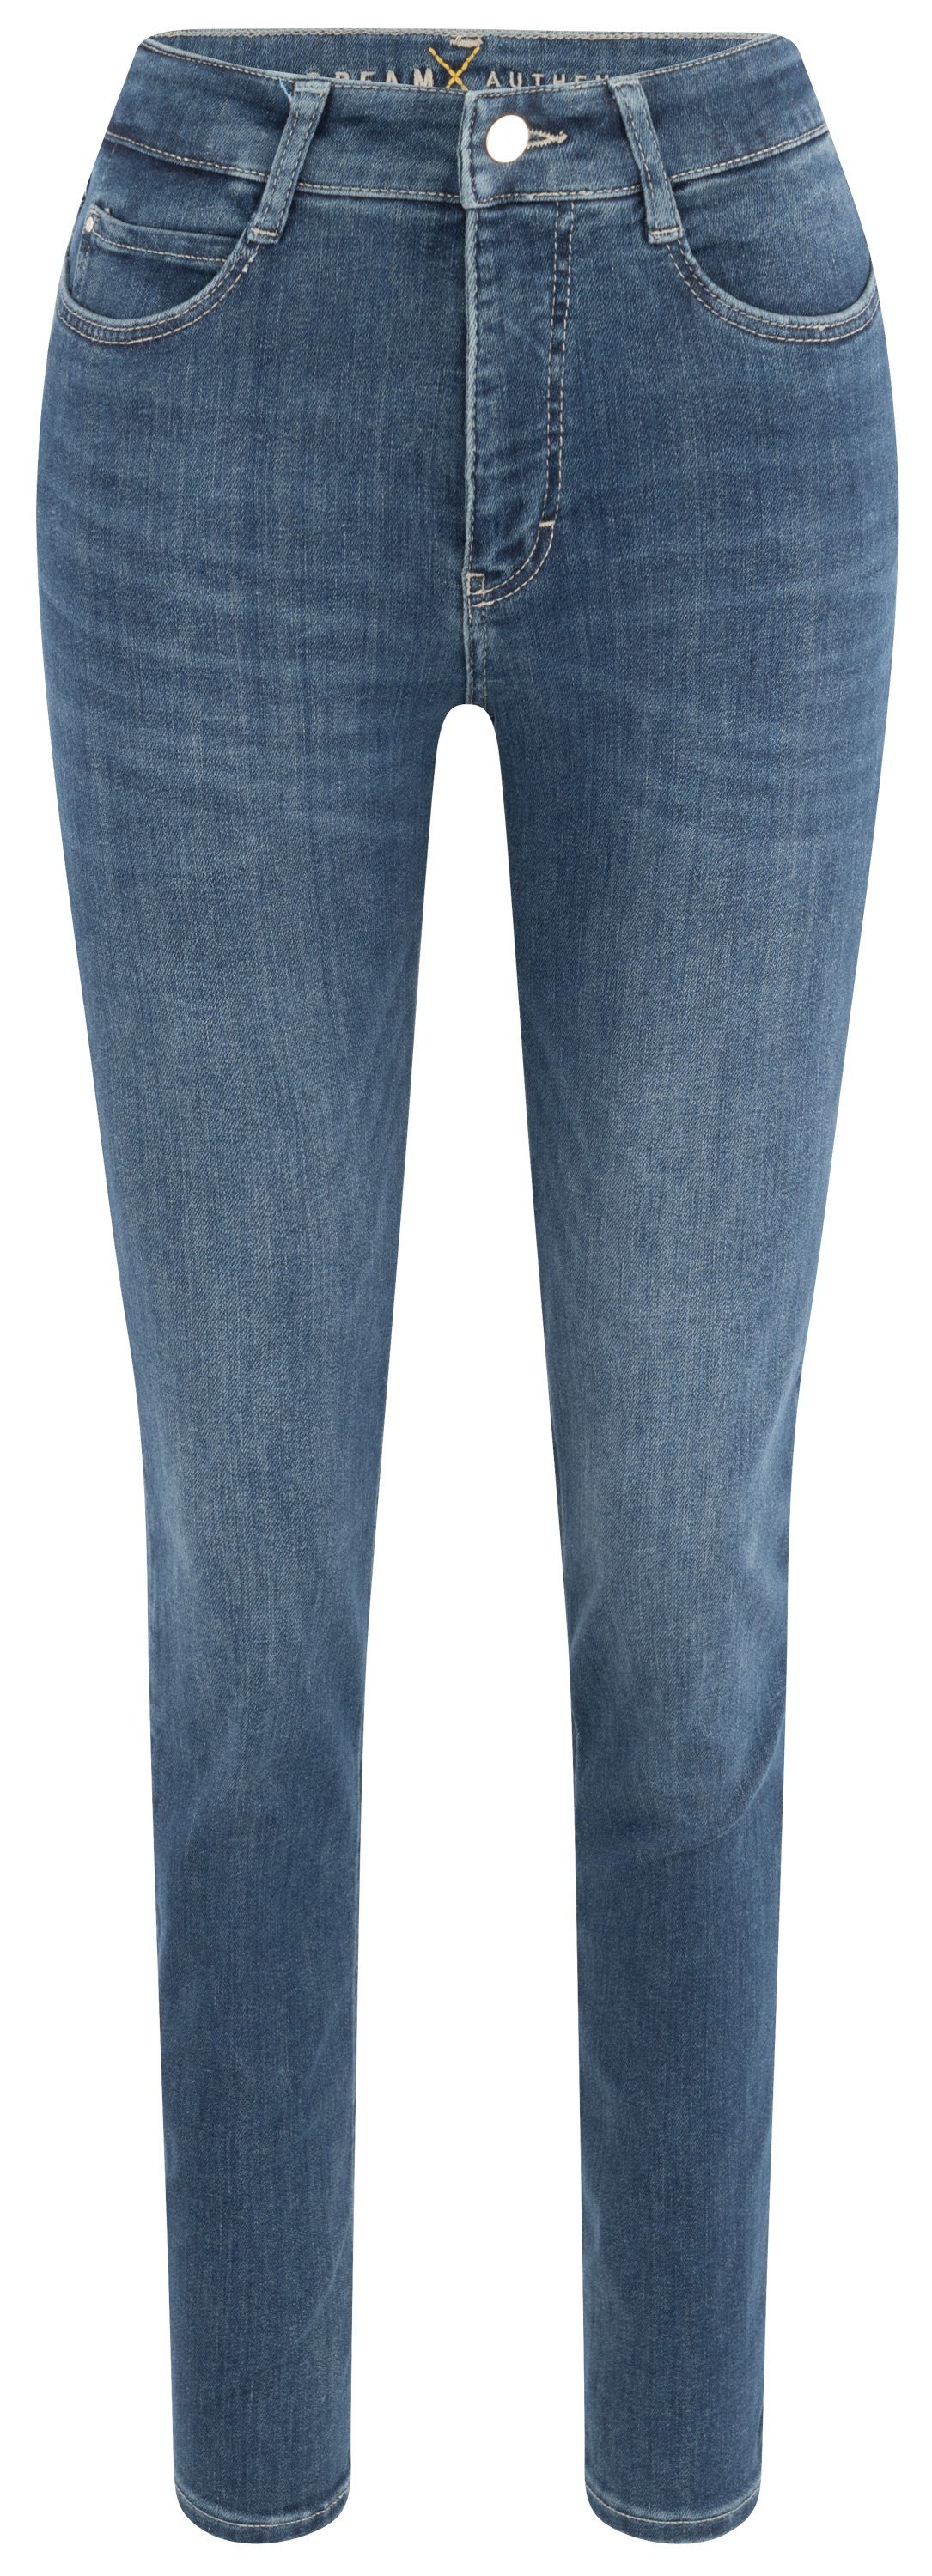 MAC Stretch-Jeans MAC blue mid authentic wash 5456-90-0358 DREAM D625